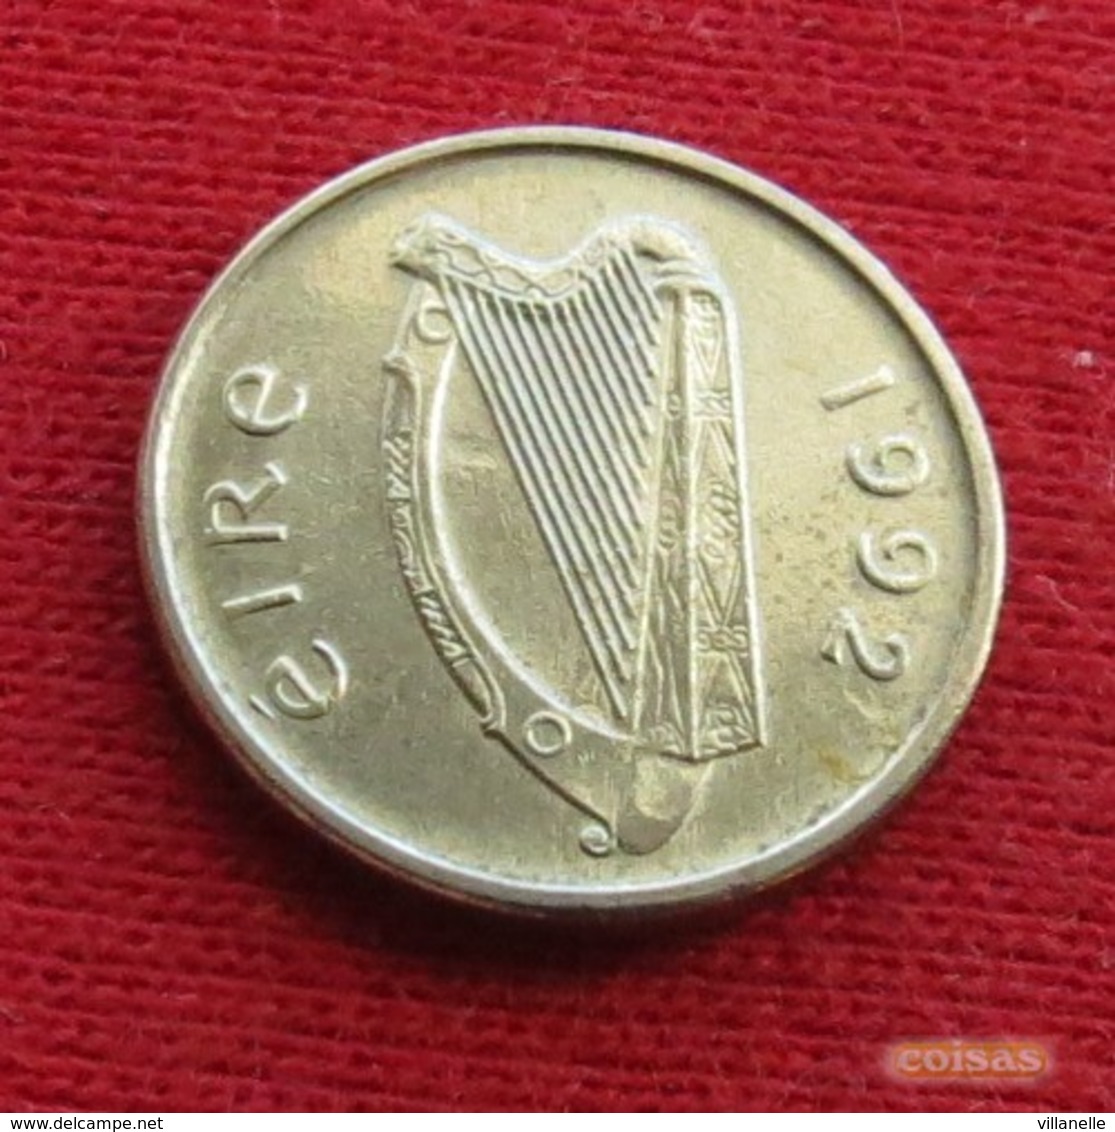 Ireland 5 Pence 1992 KM# 28 Irlanda Irlande Ierland Eire - Irlande